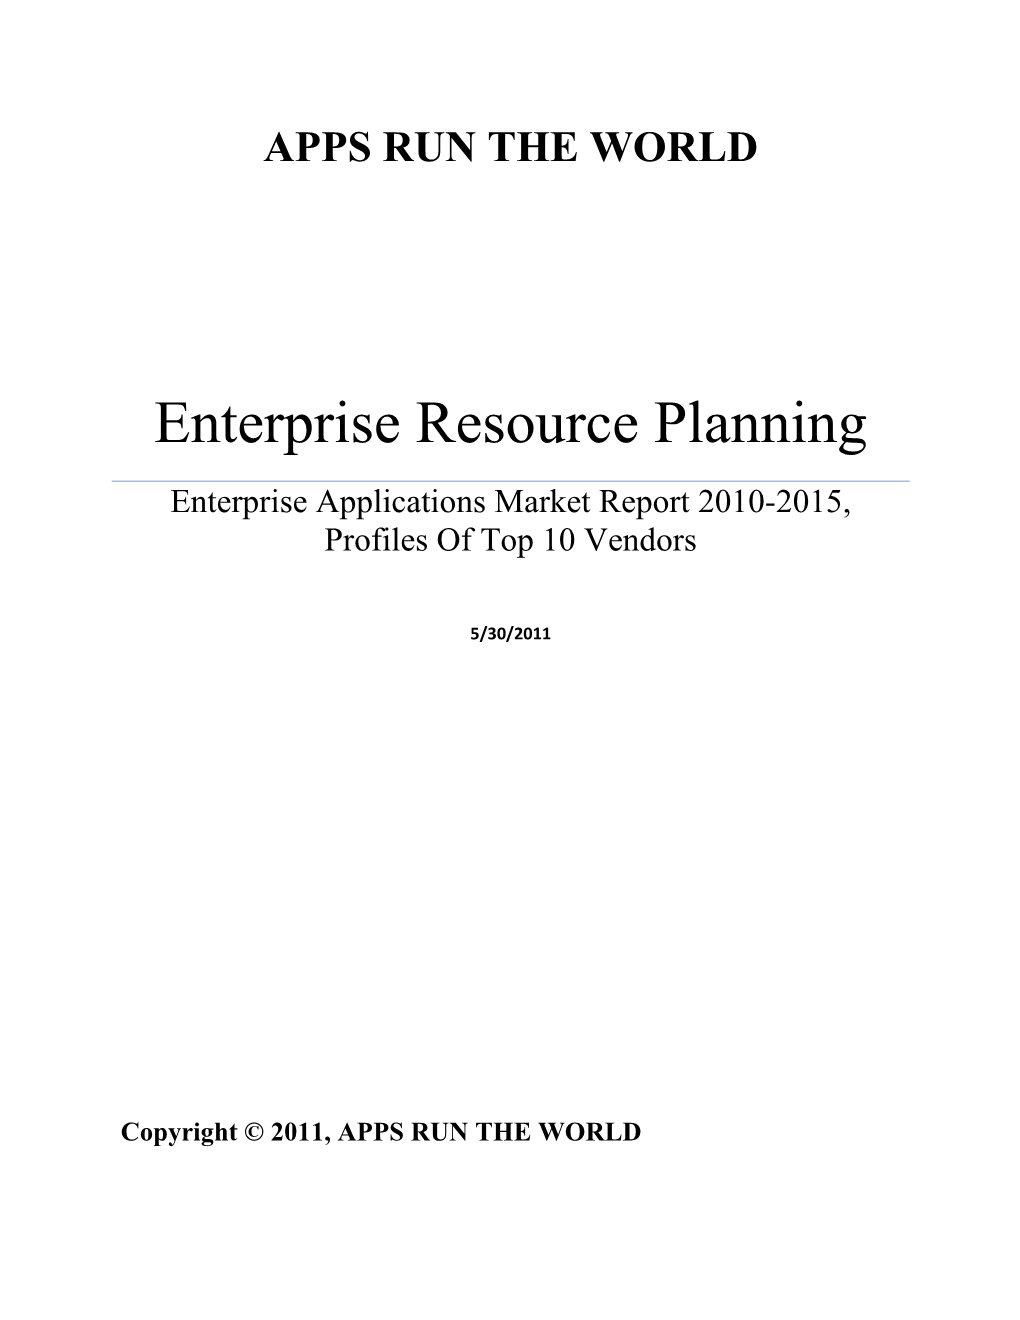 Enterprise Resource Planning Enterprise Applications Market Report 2010-2015, Profiles of Top 10 Vendors